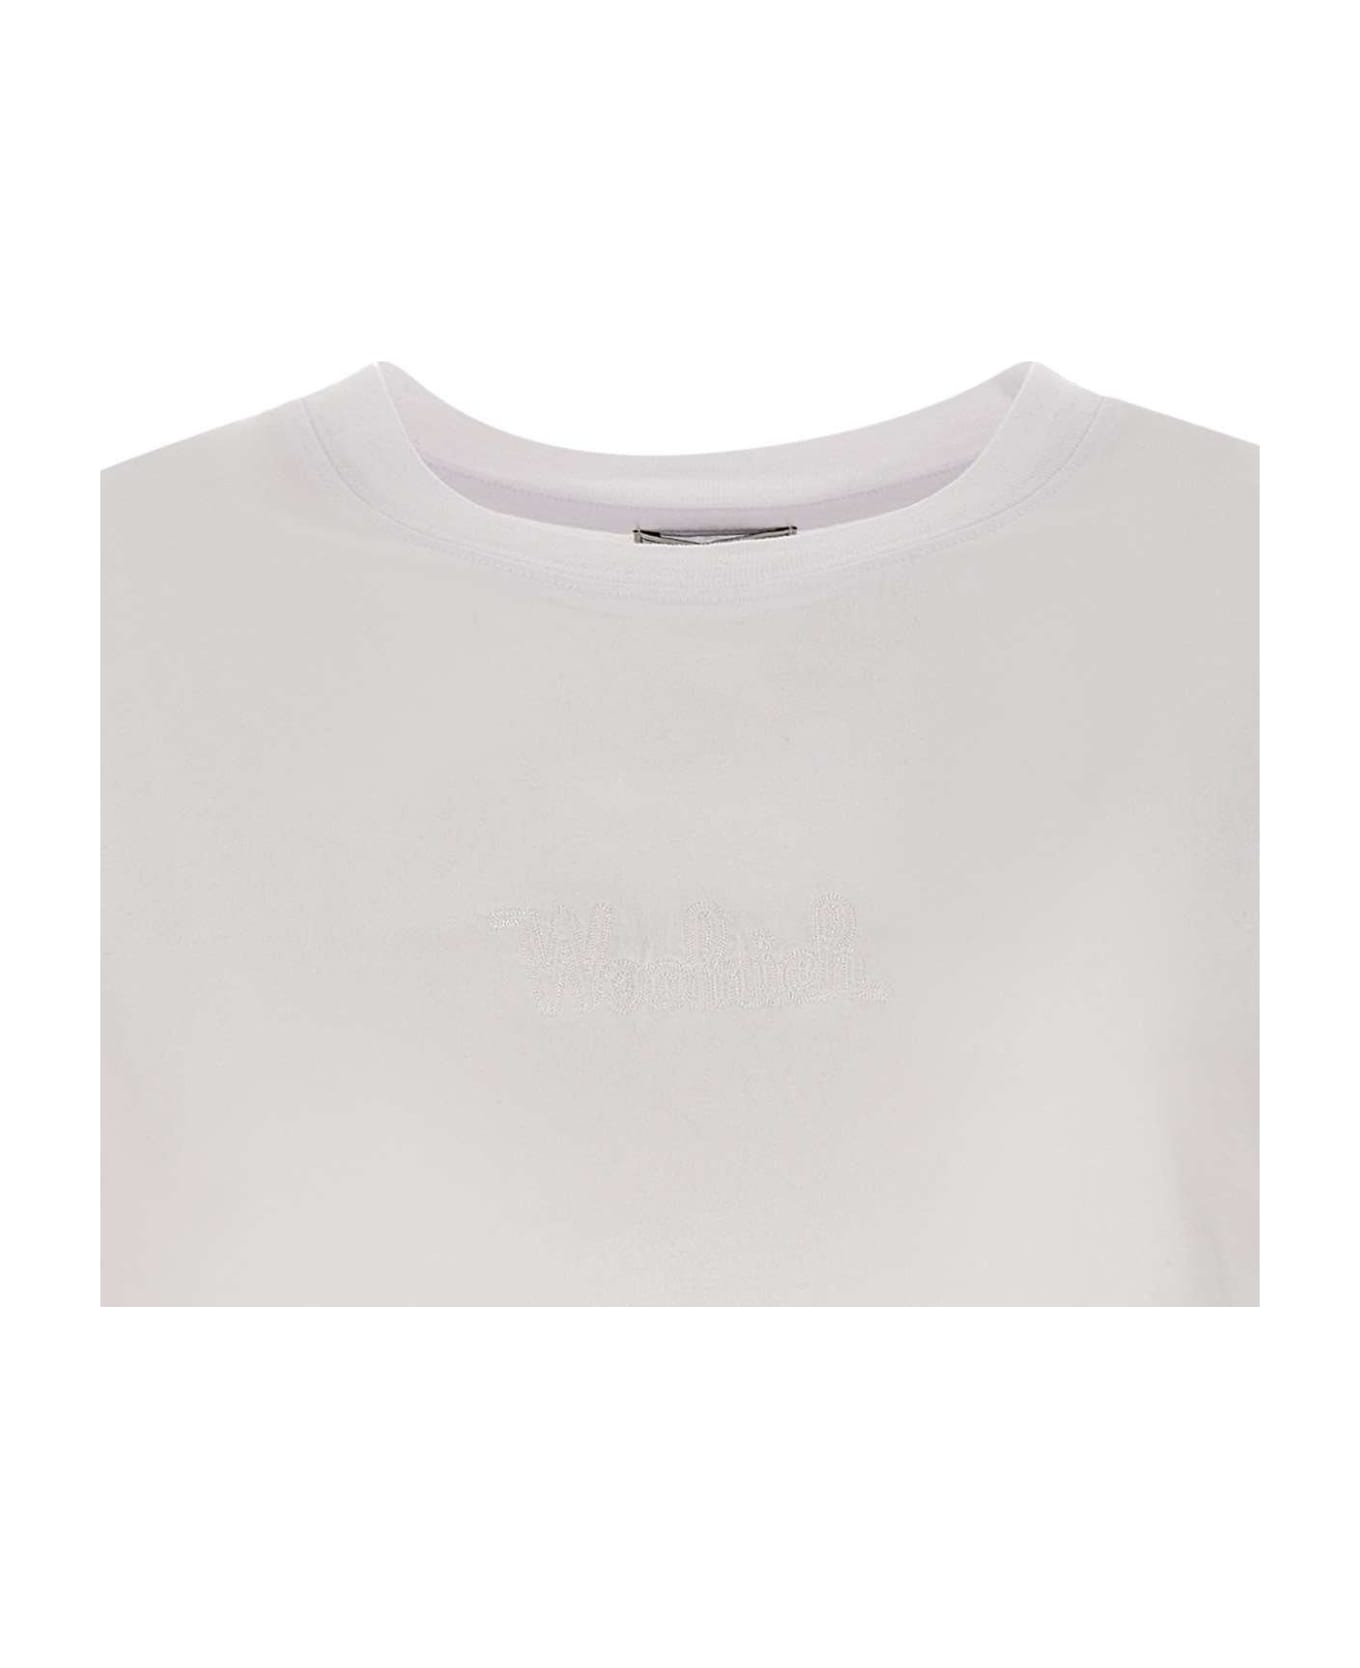 Woolrich Crewneck Short-sleeved T-shirt - Bright White